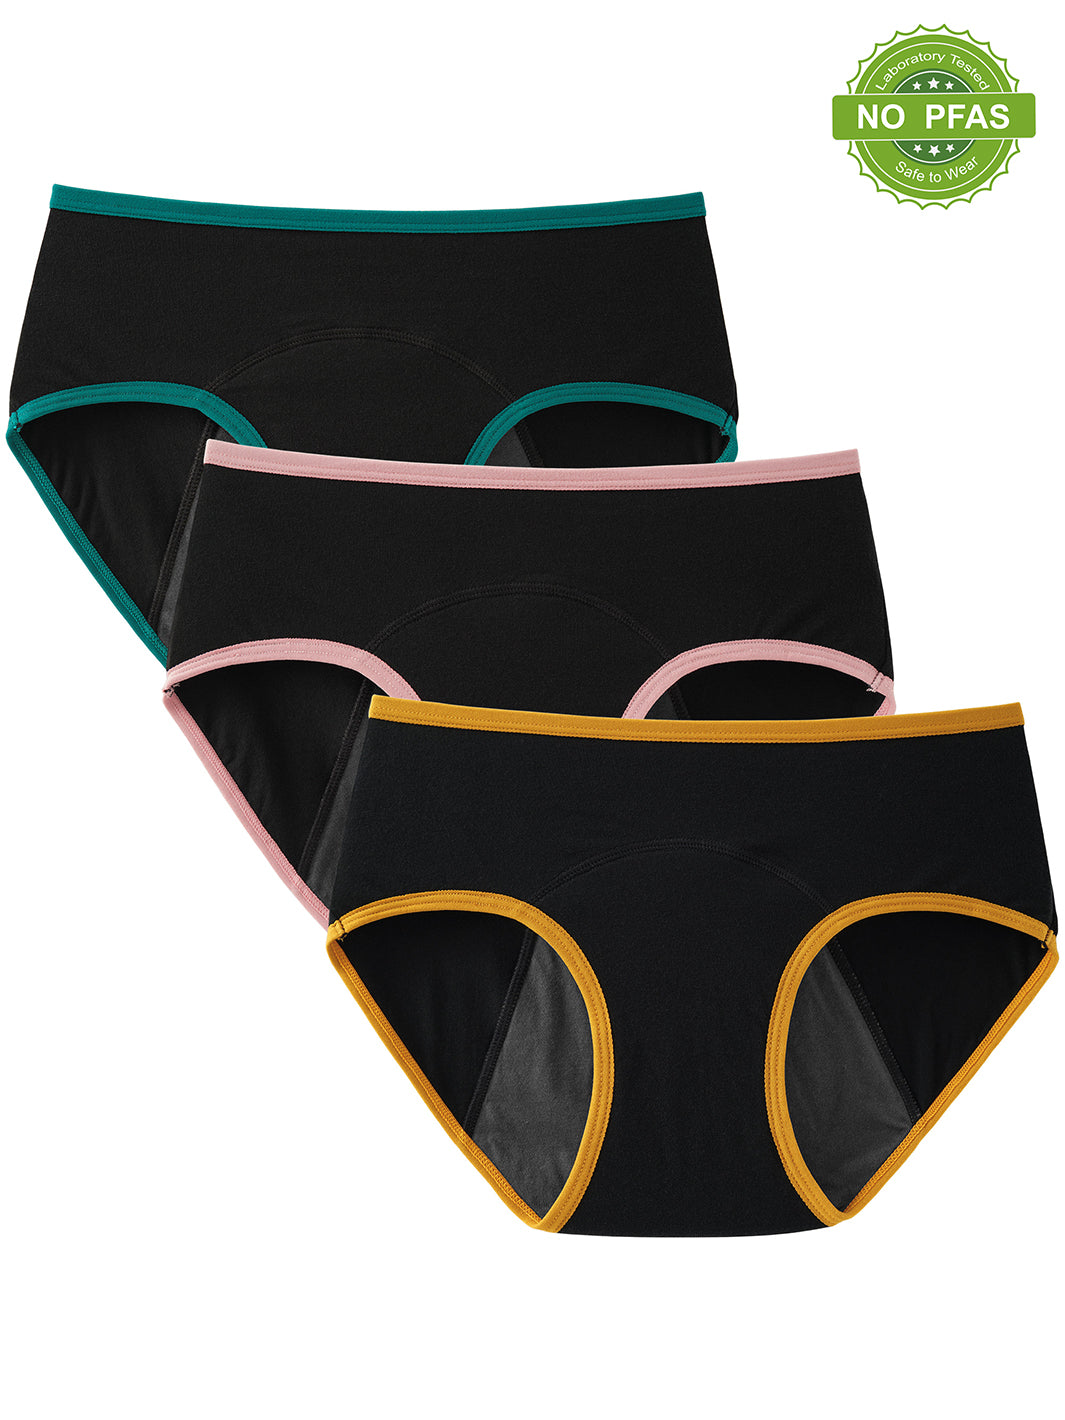 INNERSY Big Girls' Period Panties Cotton Menstrual Underwear For Teens  3-Pack (M(10-12 yrs), Beige/Pink/Green) 